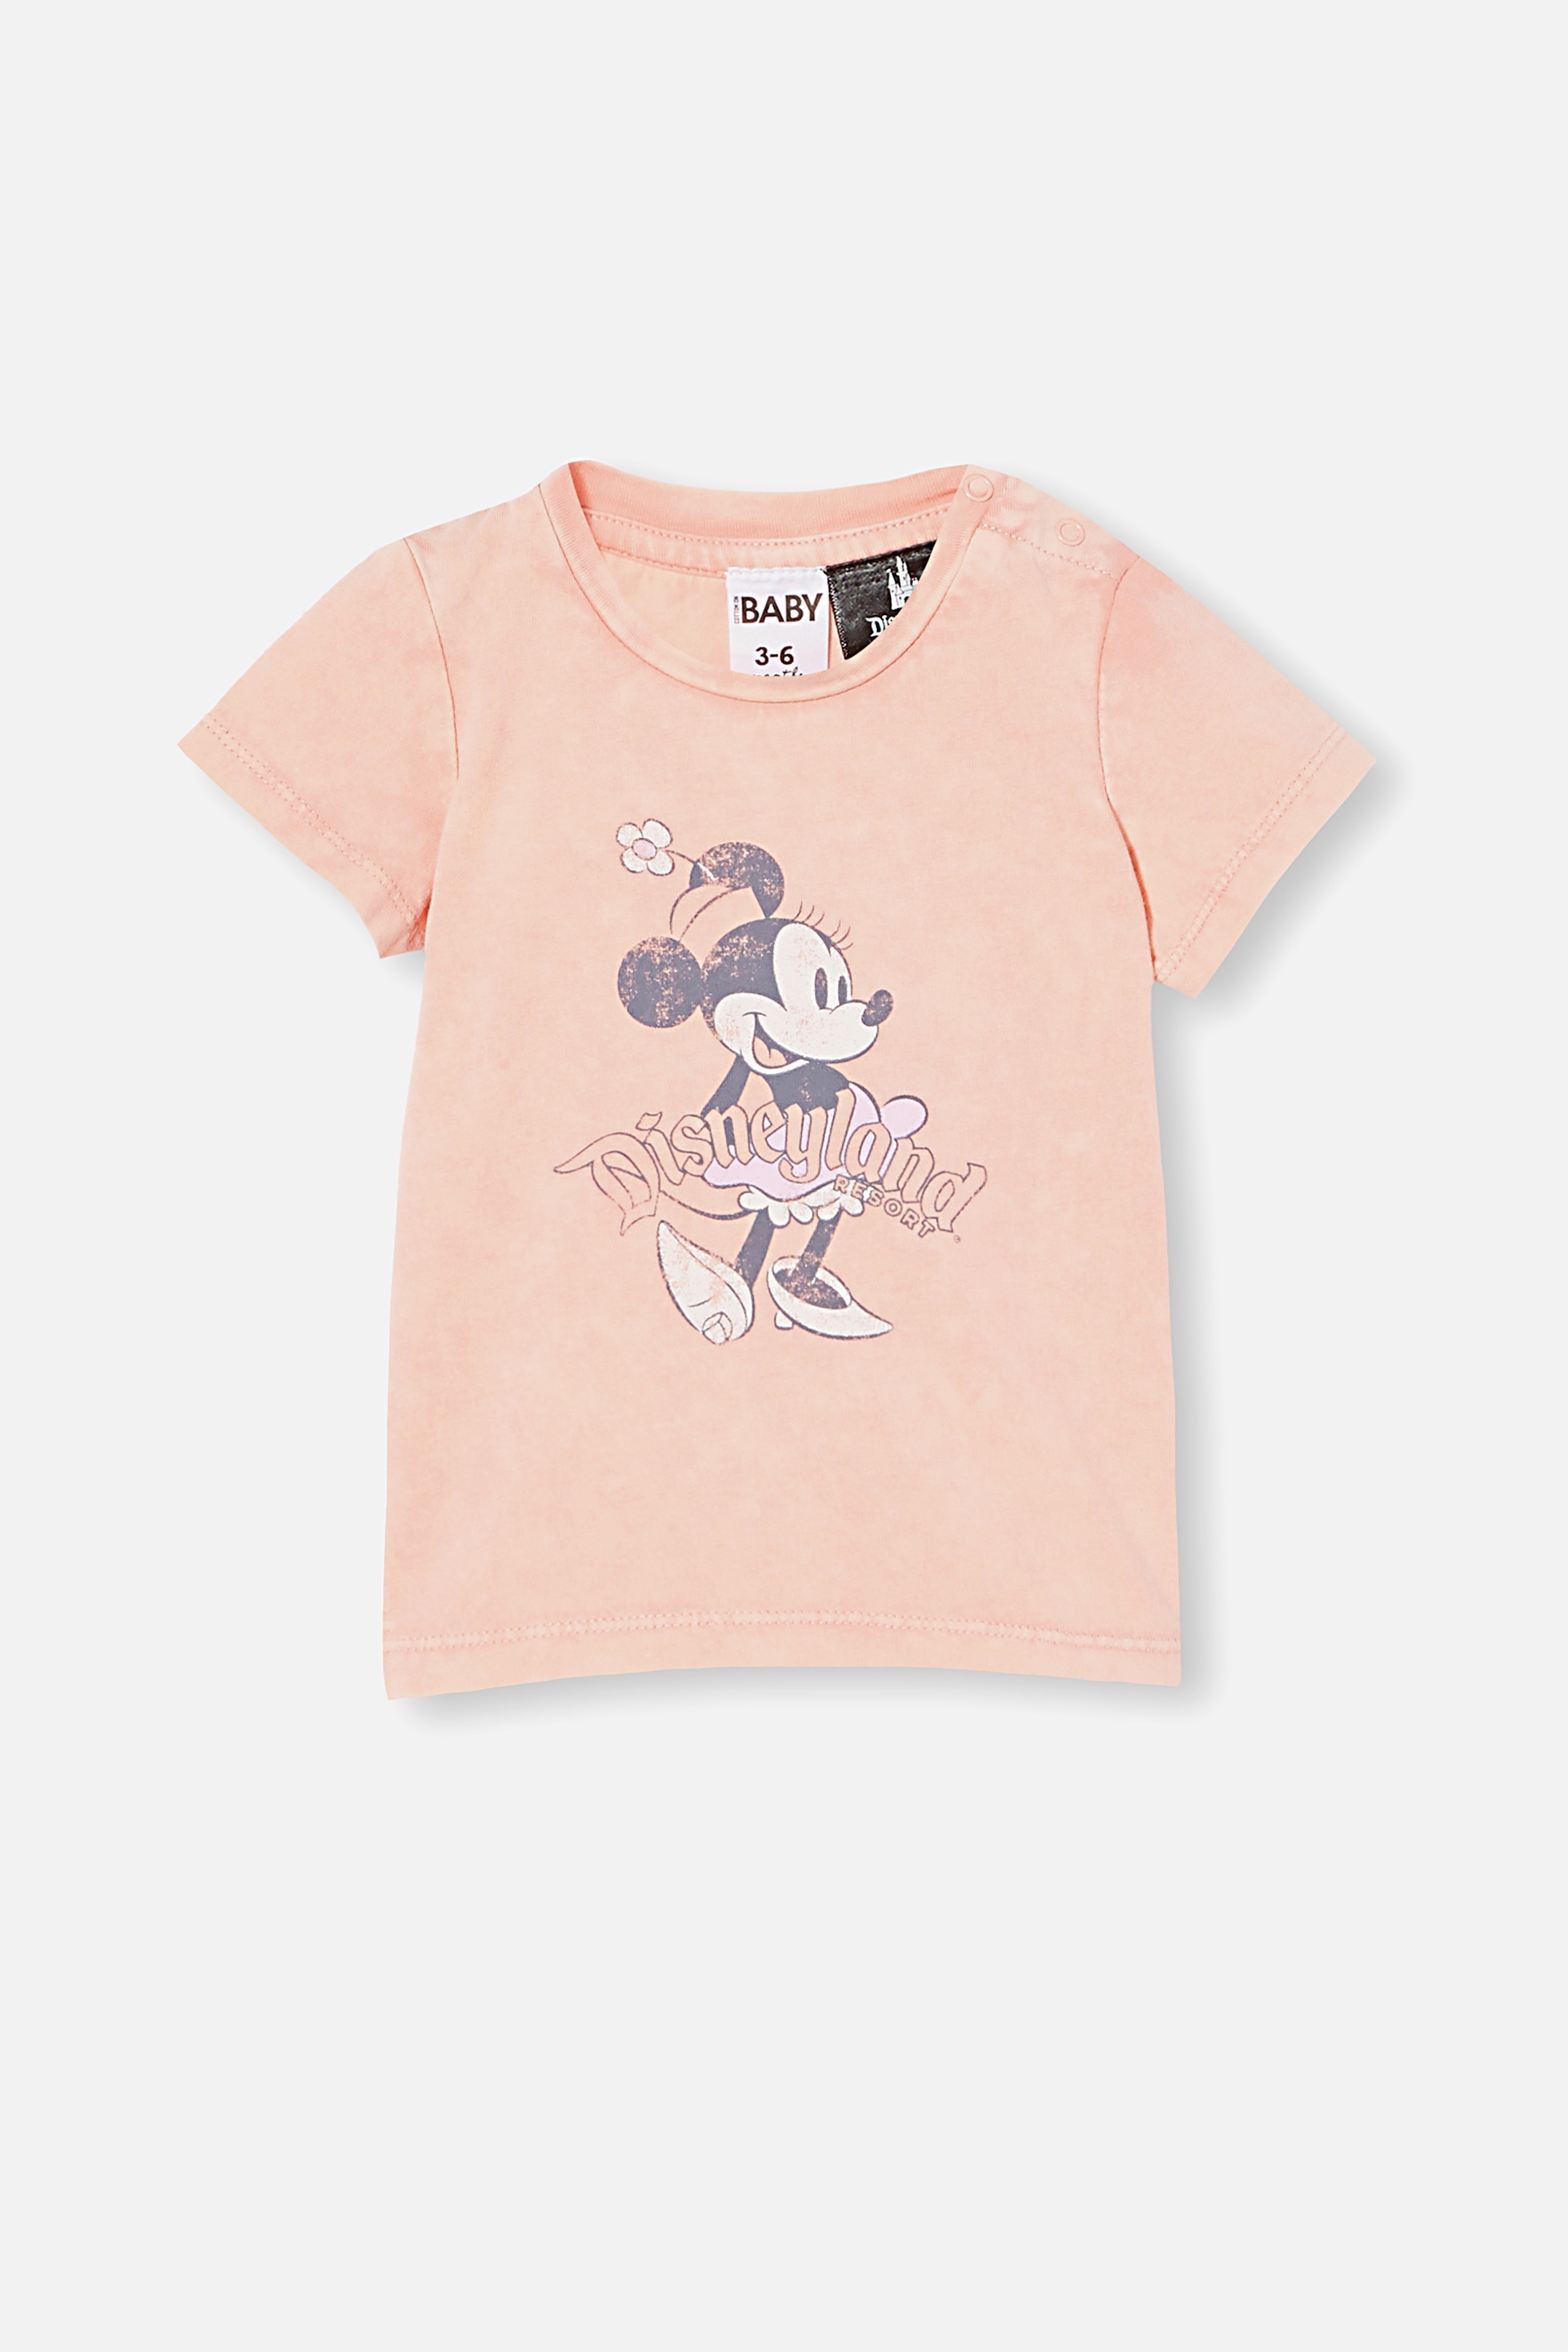 Cotton On Kids - Disneyland Jamie Short Sleeve Tee - Lcn dis musk melon snow wash/vintage minnie